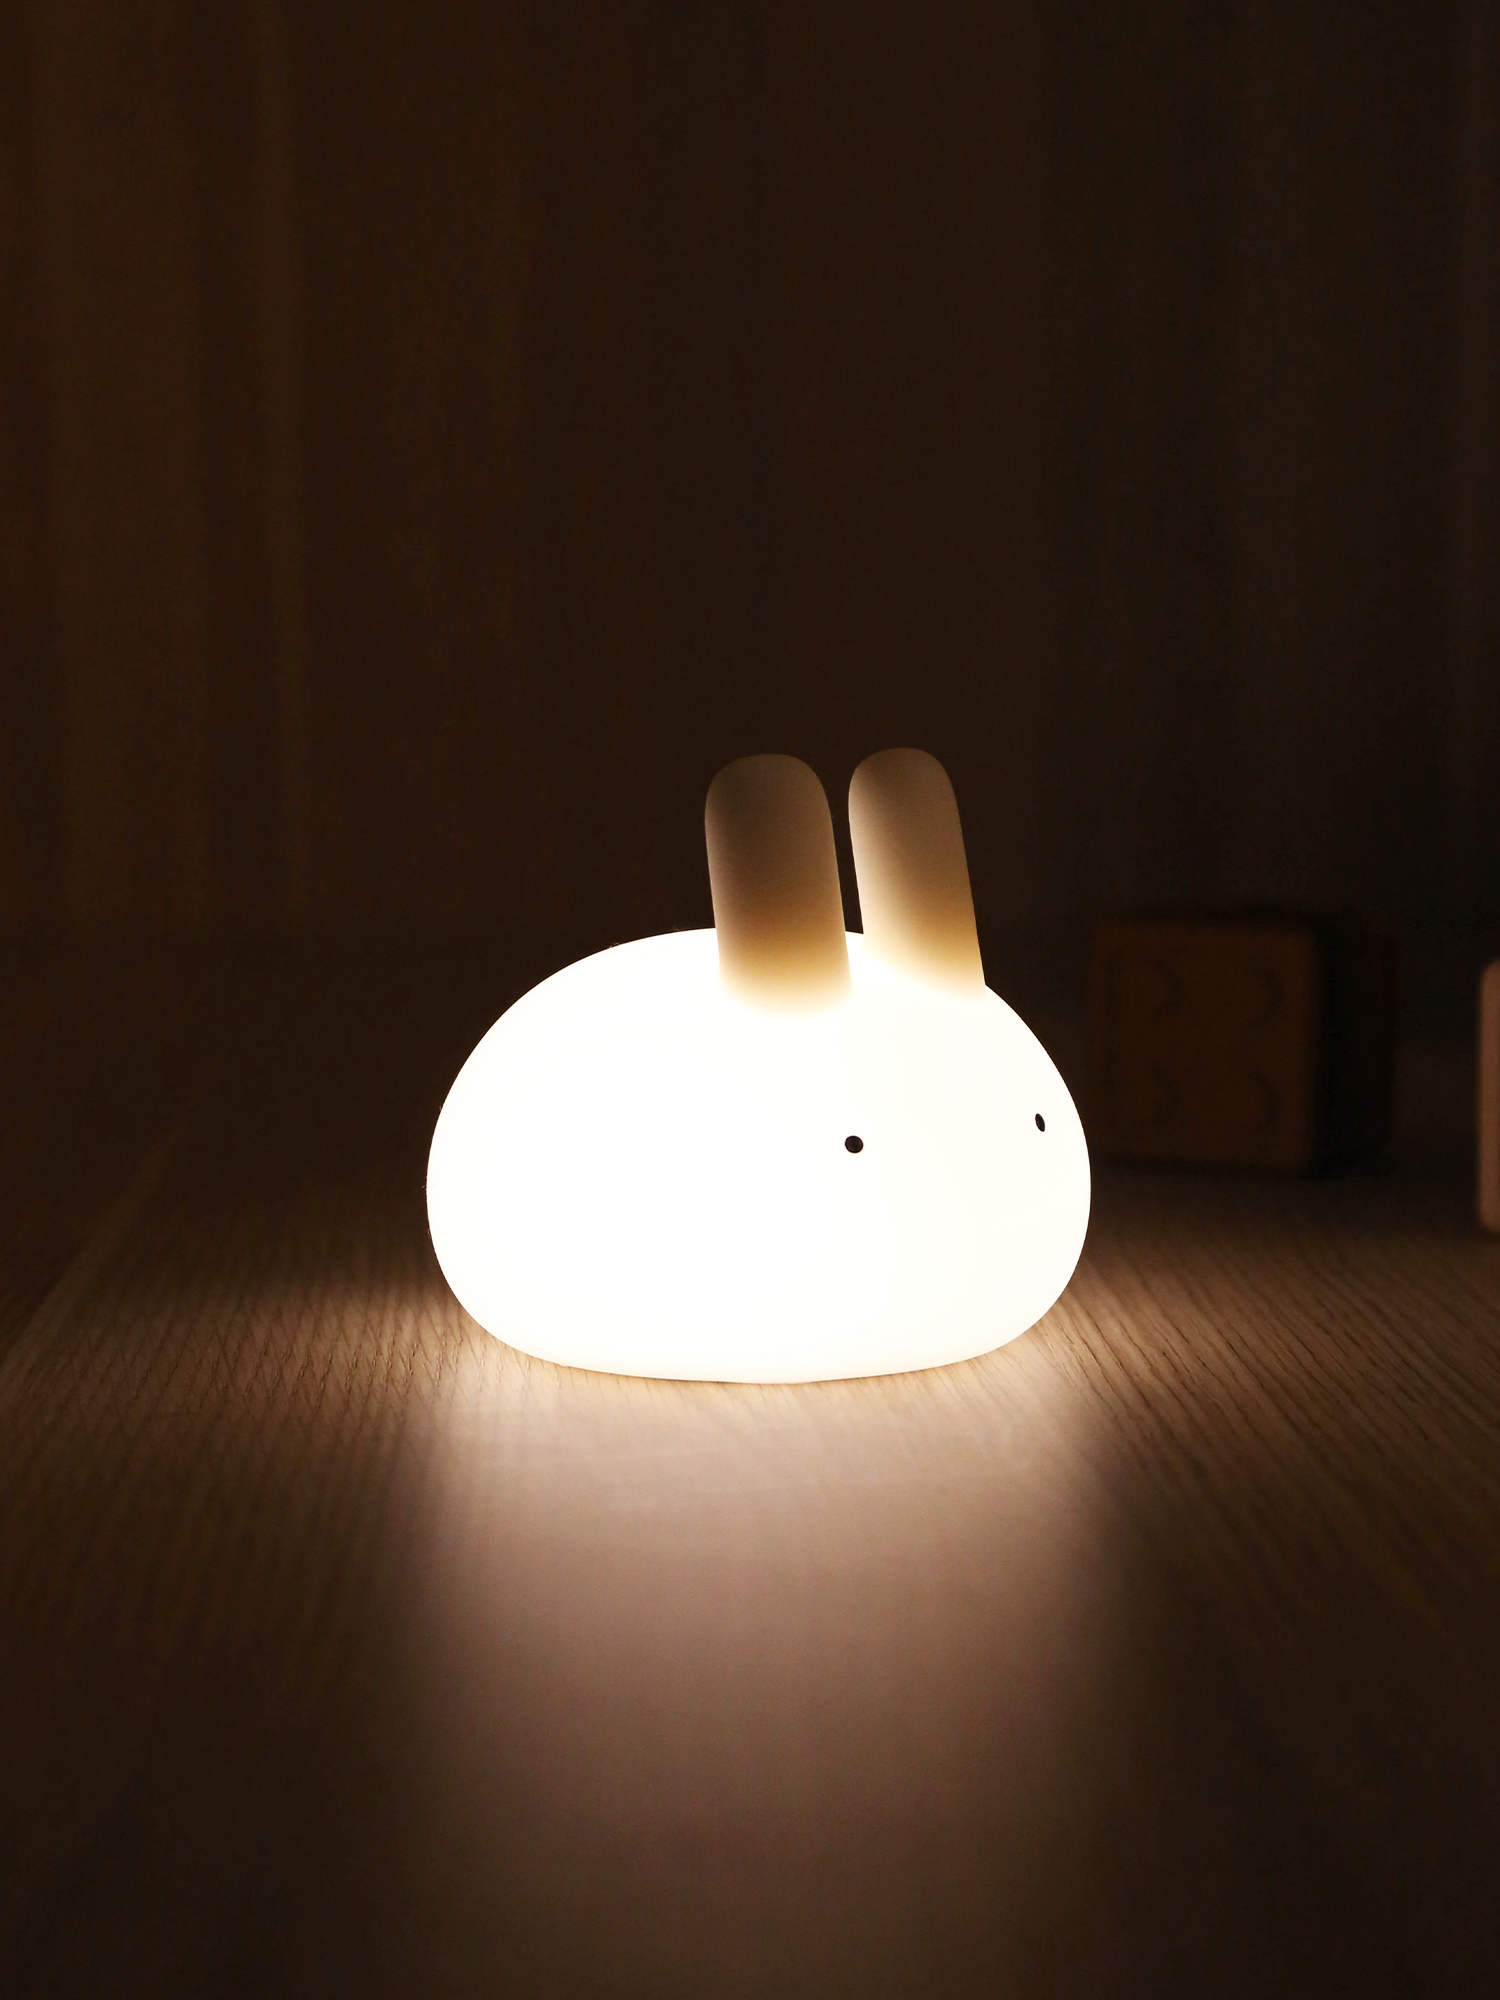 lapin rabbit night lamp | design stuff